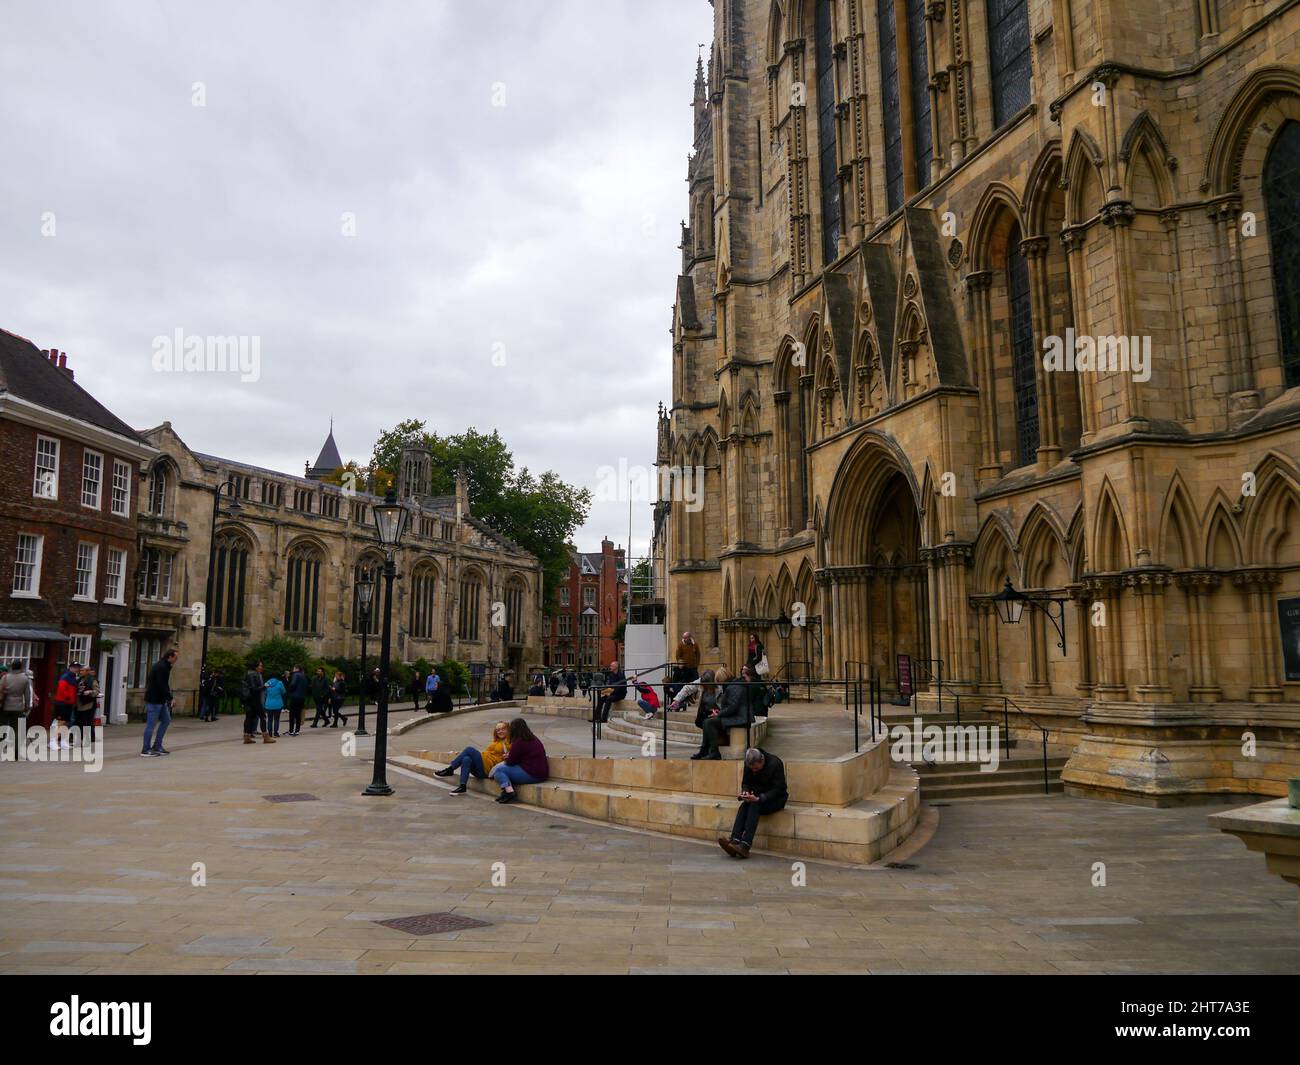 The exterior of York Minster, York, England Stock Photo